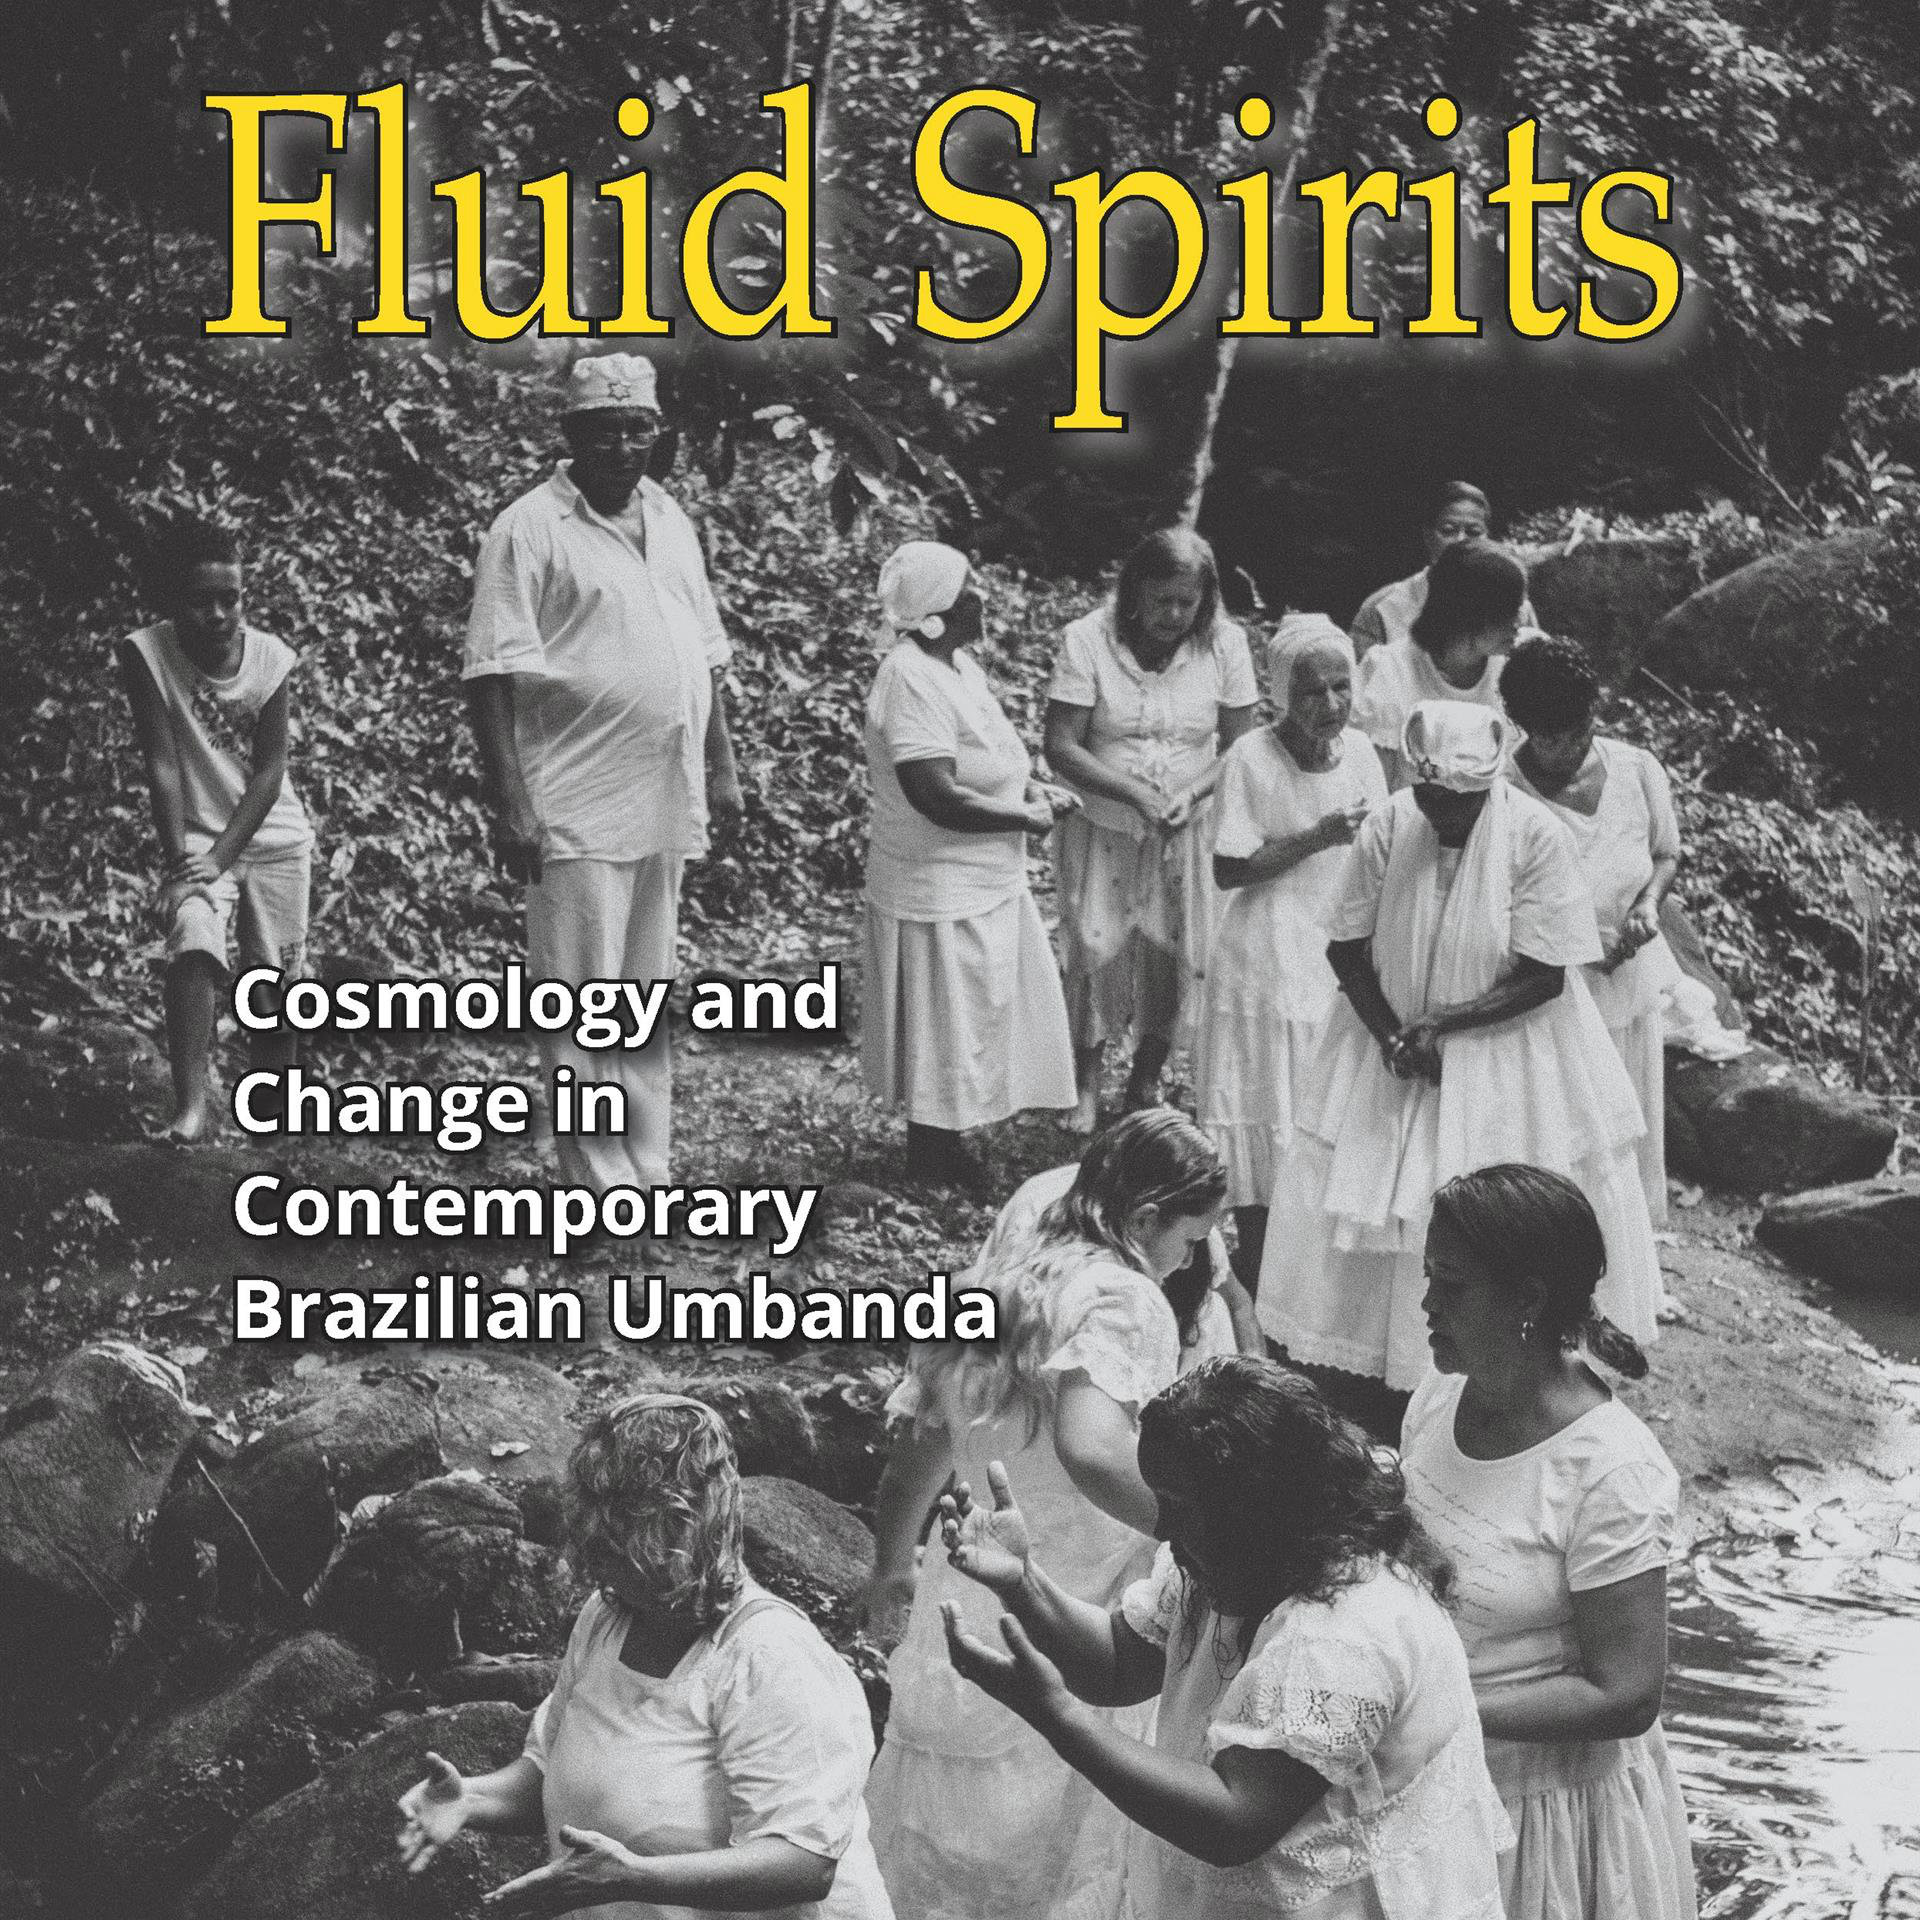 Fluid Spirits crop 1 1